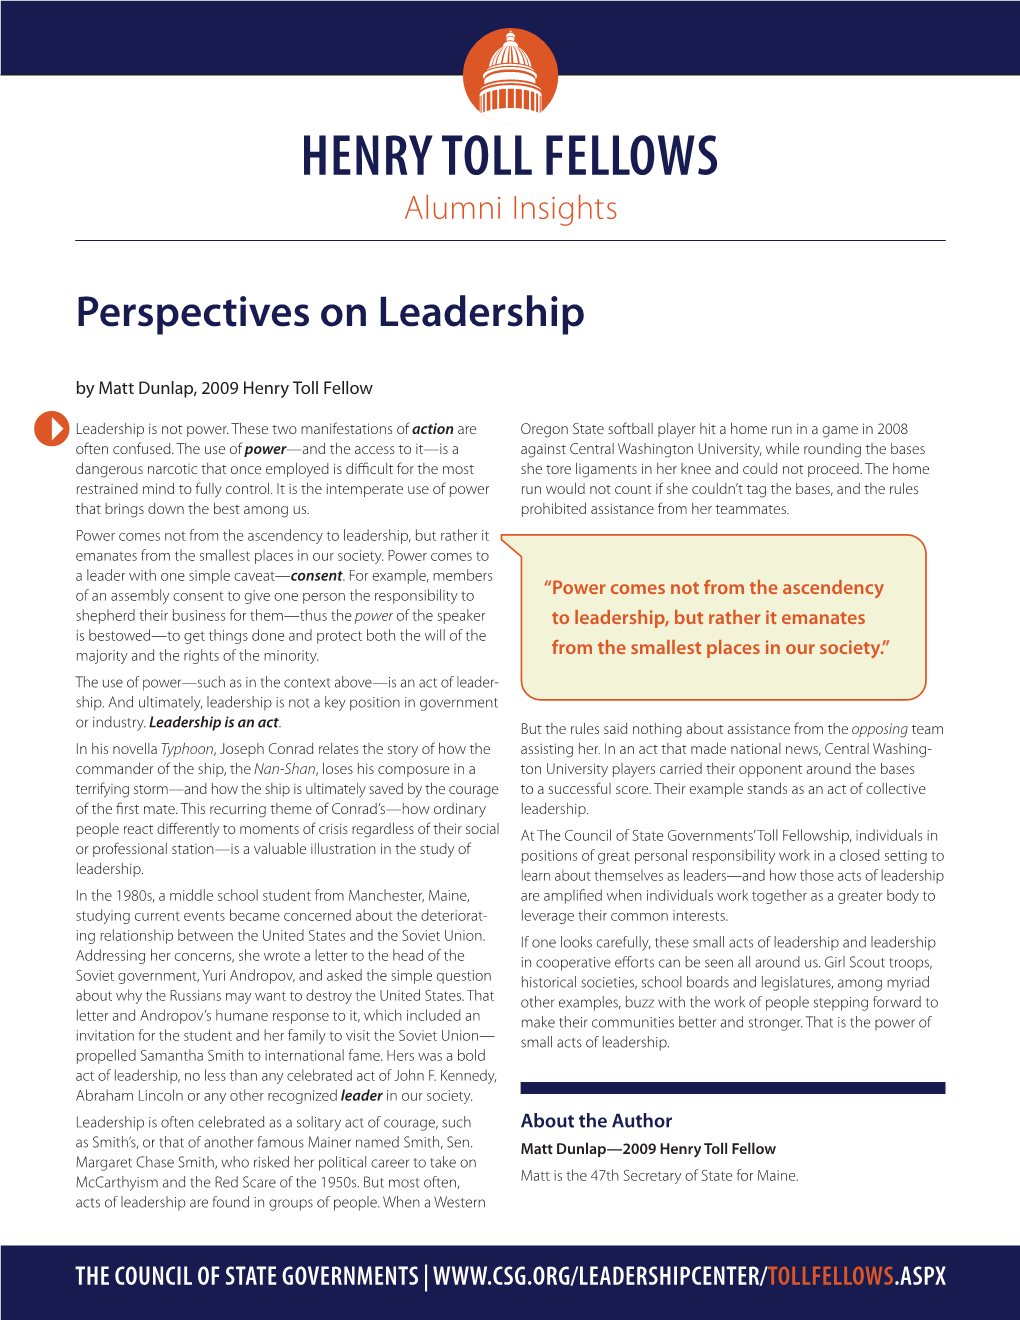 Perspectives on Leadership by Matt Dunlap, 2009 Henry Toll Fellow